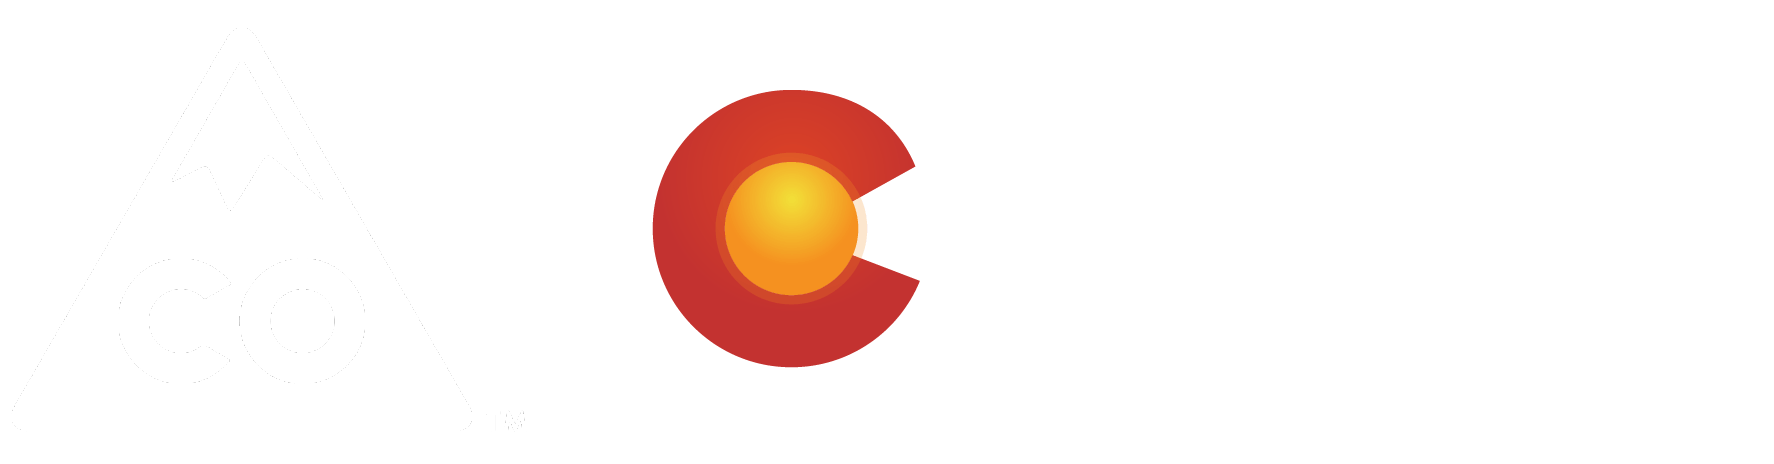 Co -Owner Logo - Colorado State Logo Licensing | OEDIT